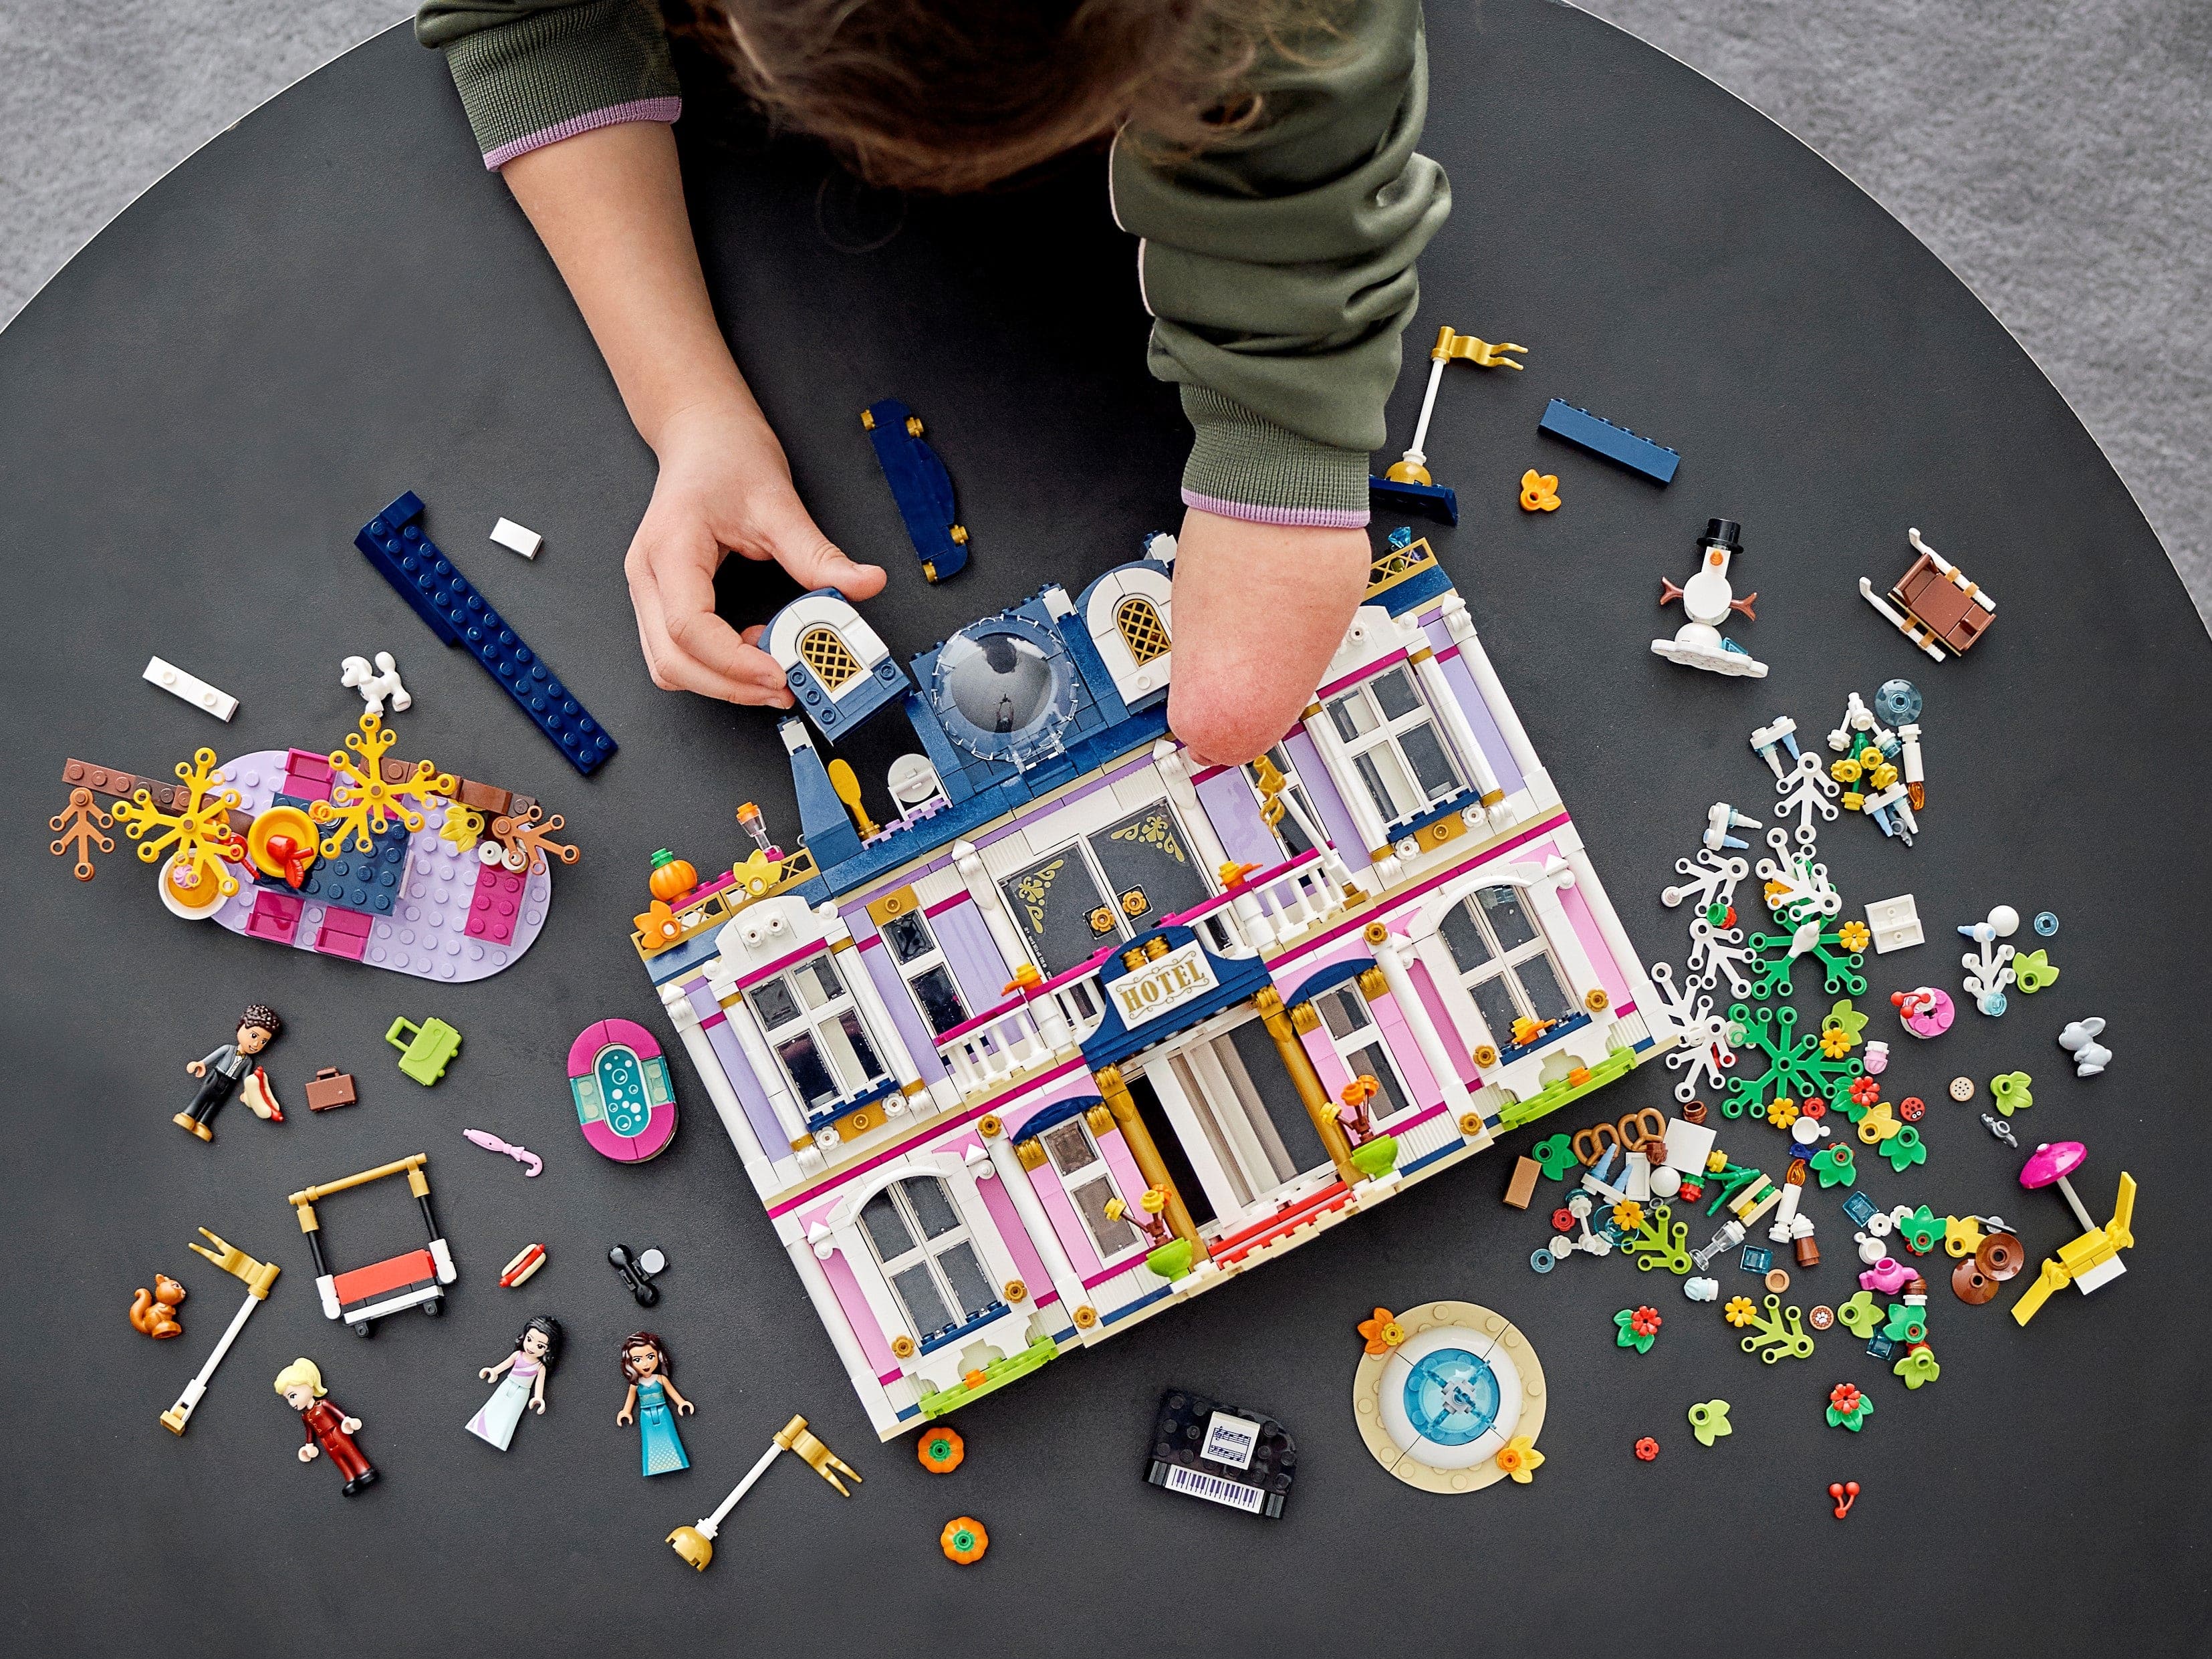 Конструктор LEGO Friends «Гранд-отель Хартлейк Сити» 41684 / 1308 деталей